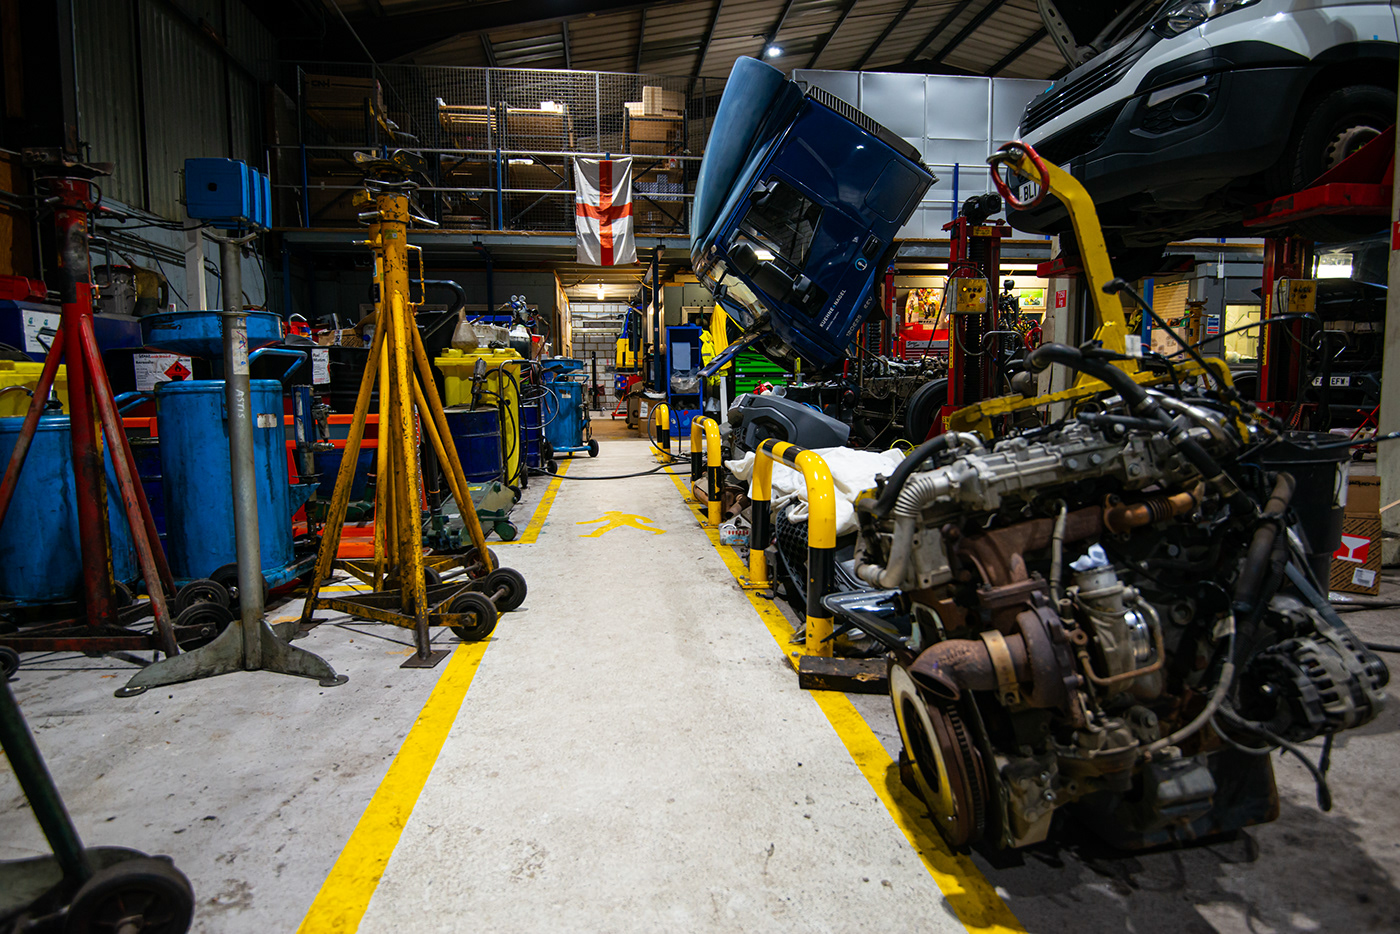 IVECO Truck Reading croydon Workshop night car industrial Mechanic garage